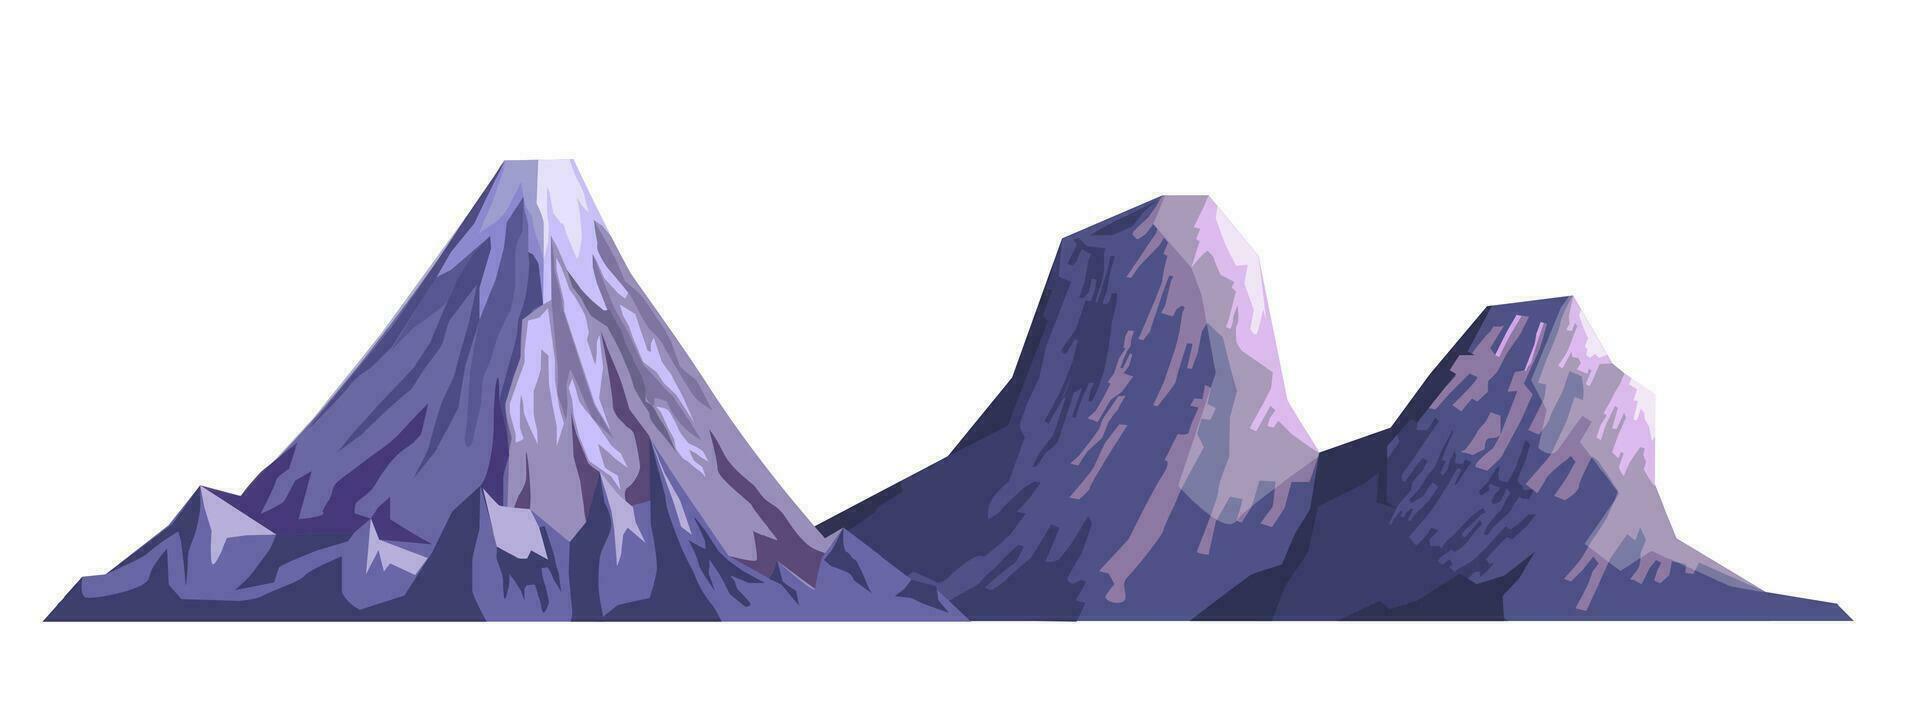 alto montañas y rocas, naturaleza paisaje vector